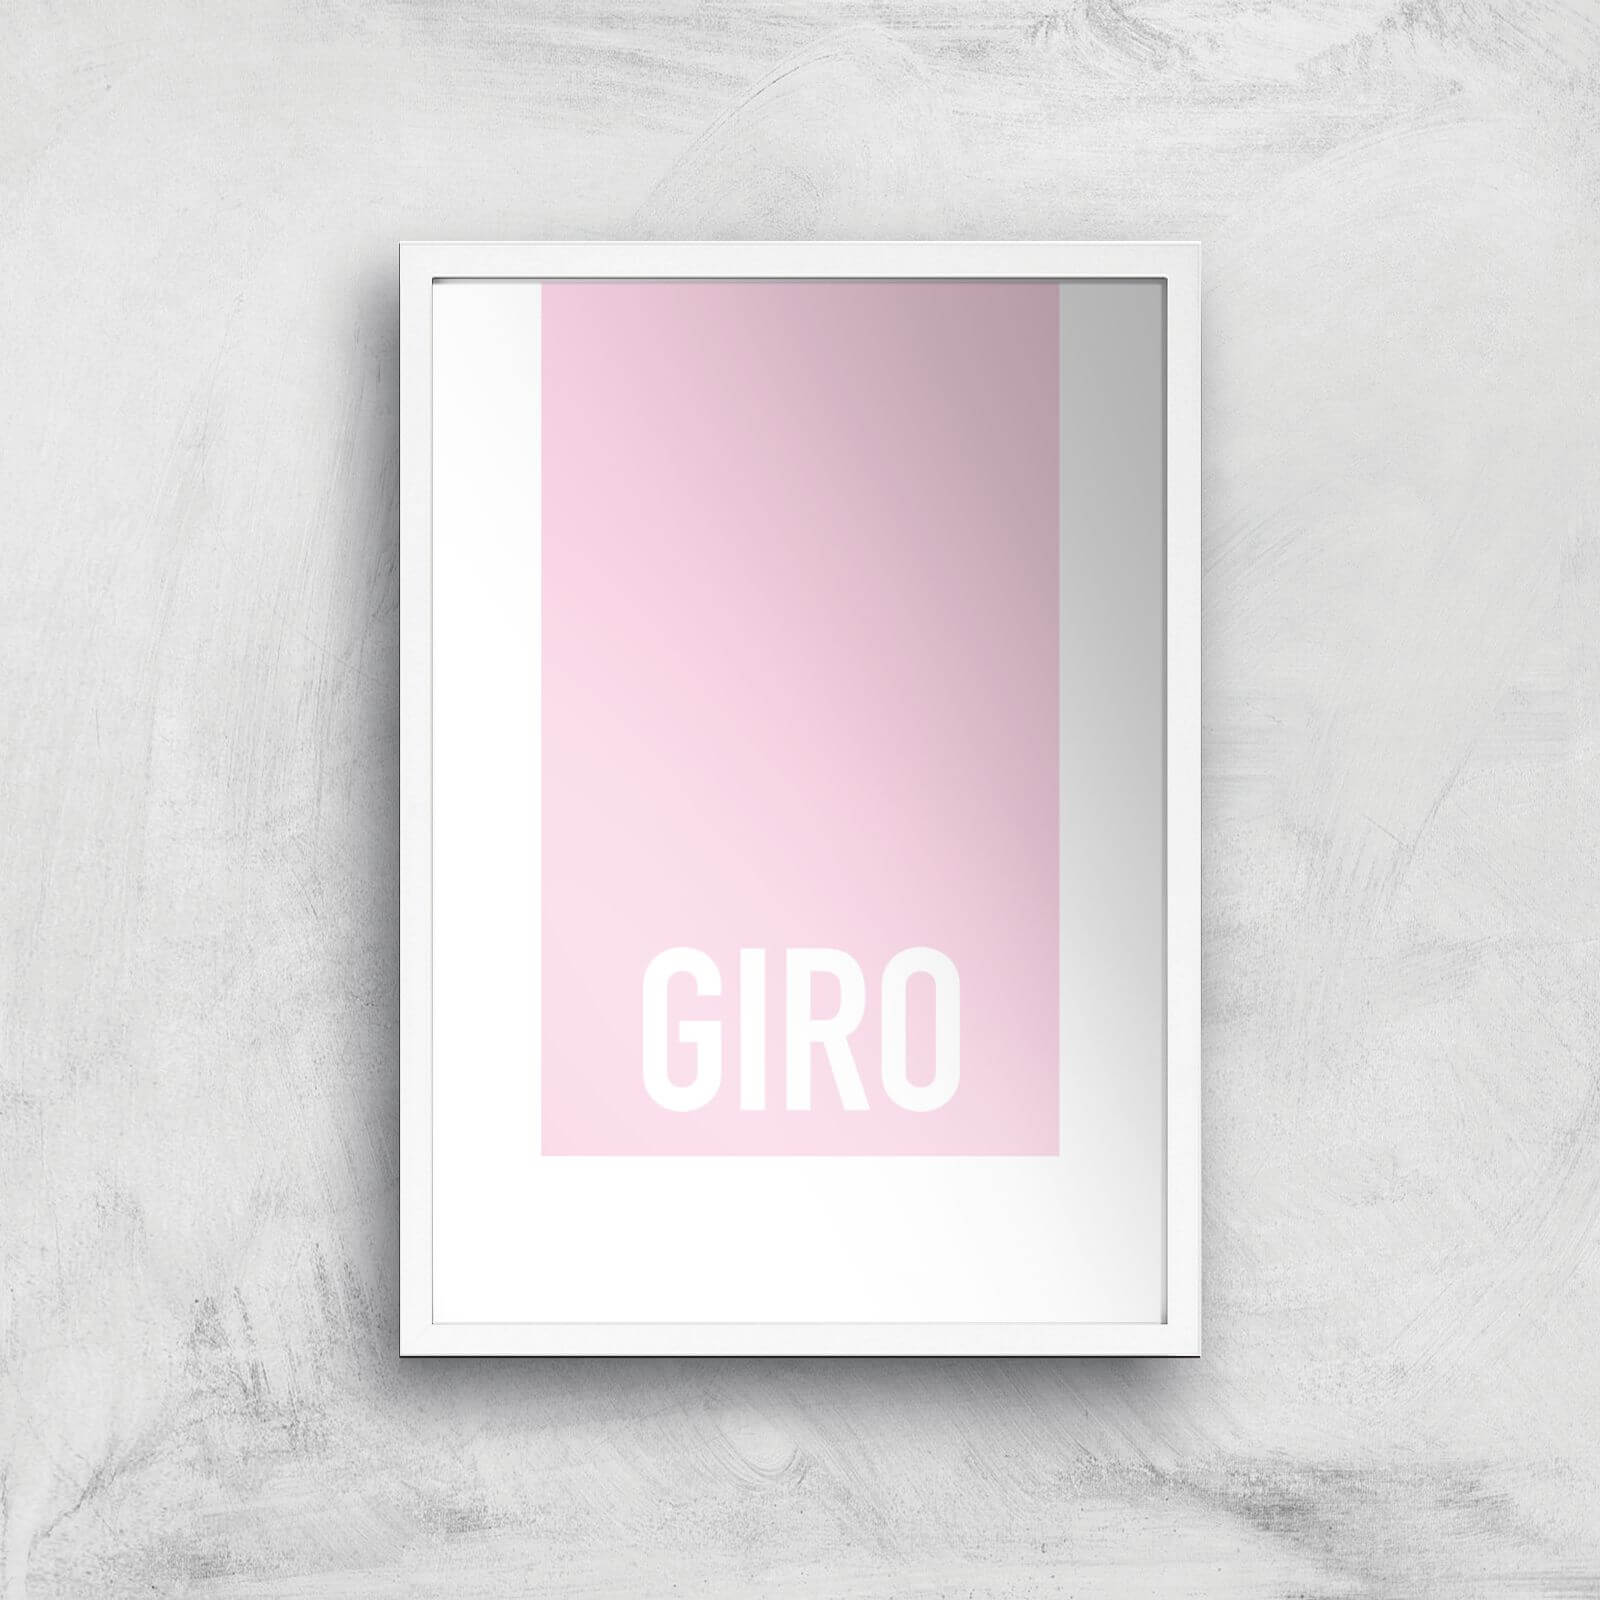 PBK Giro Giclee Art Print - A4 - White Frame